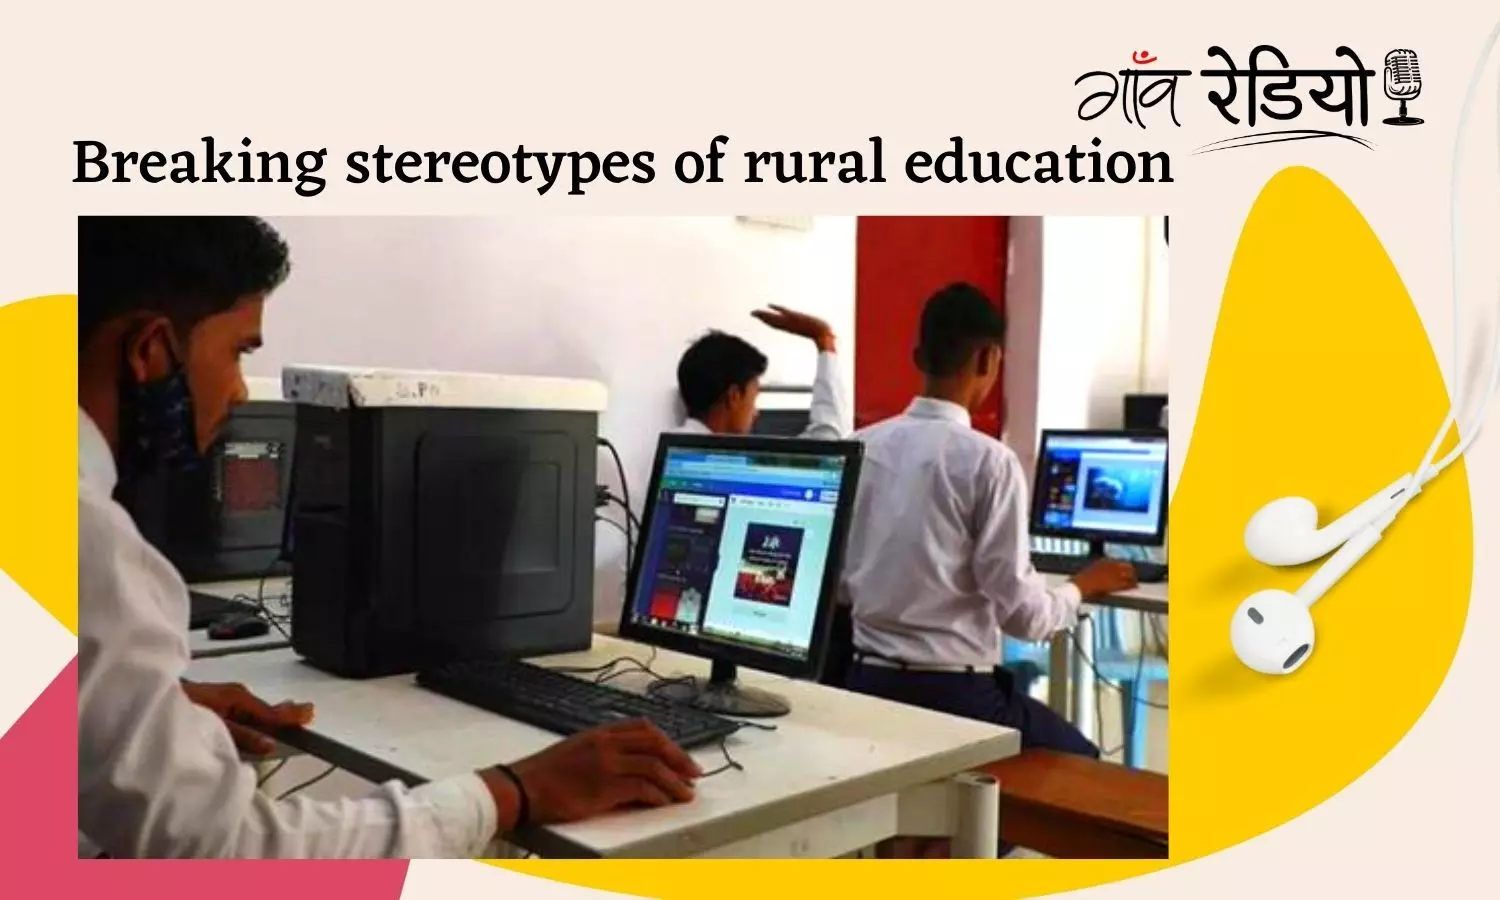 Gaon Radio: A village school is breaking stereotypes of rural education